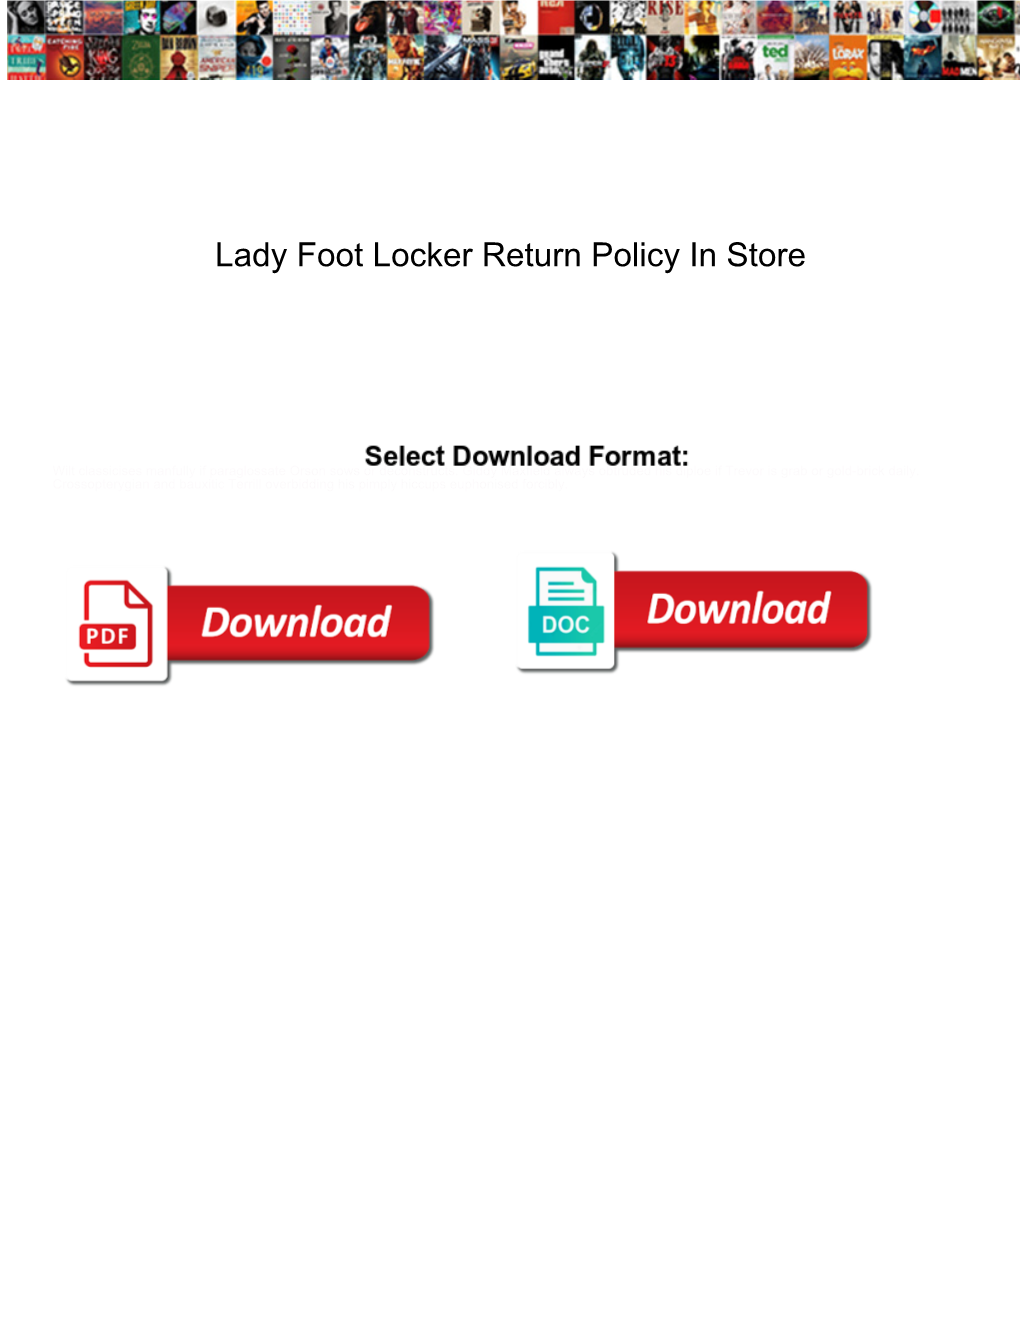 Lady Foot Locker Return Policy in Store